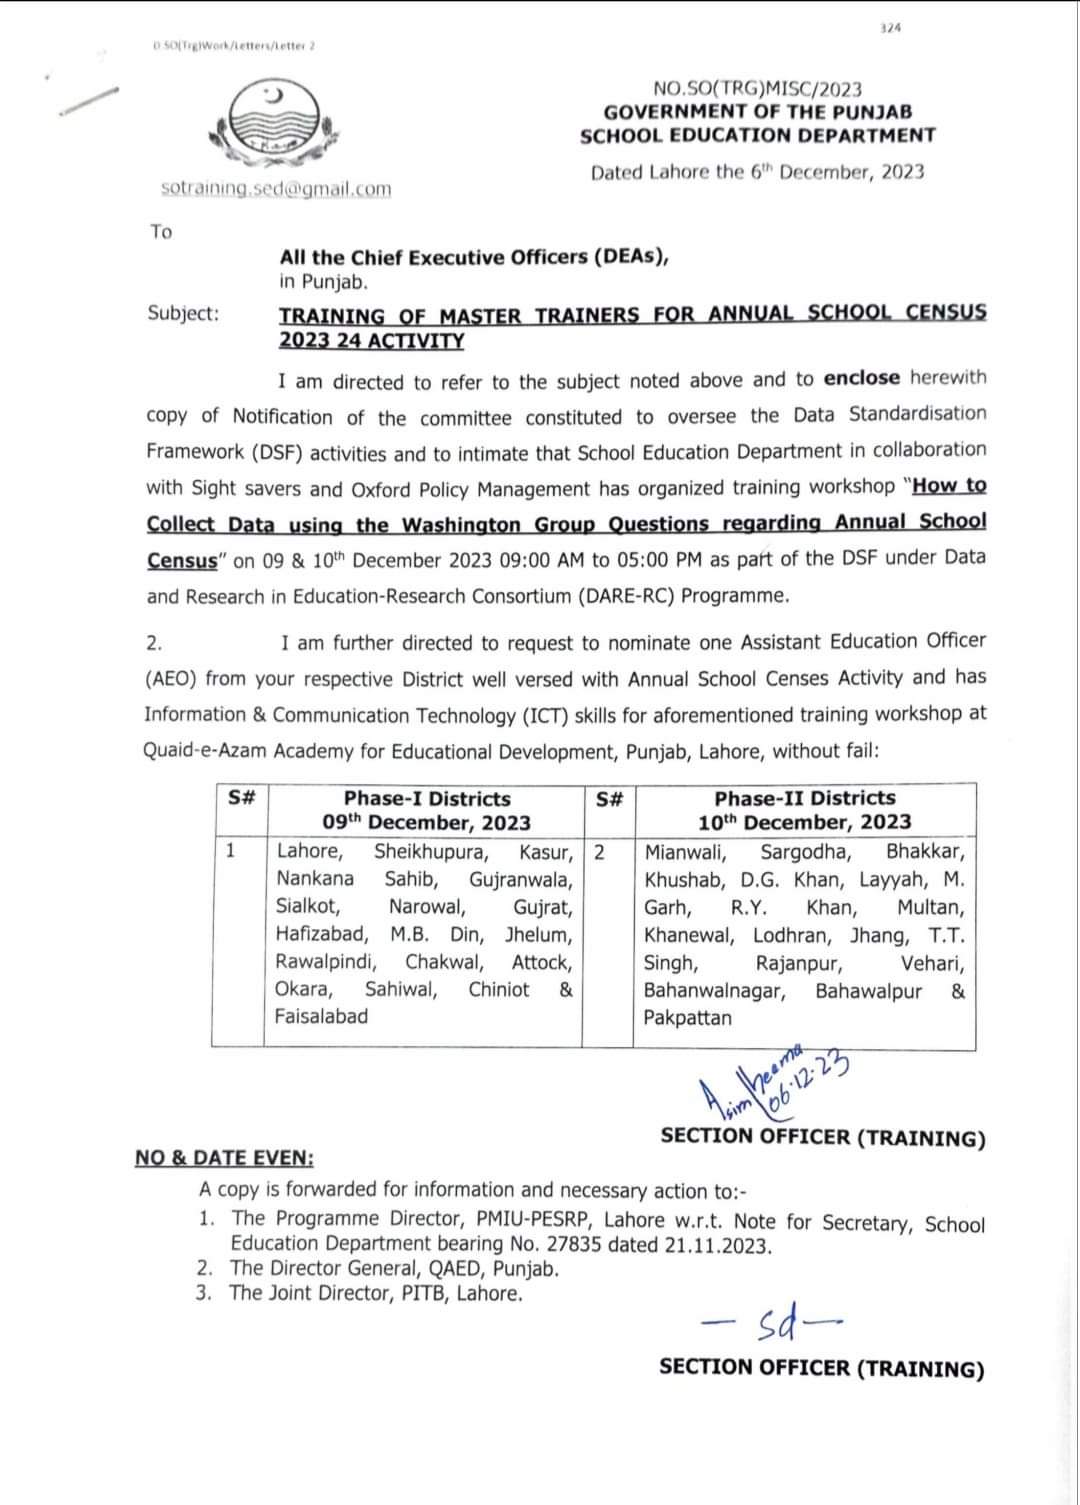 Annual School Census 2023 Training of Master Trainers in Lahore